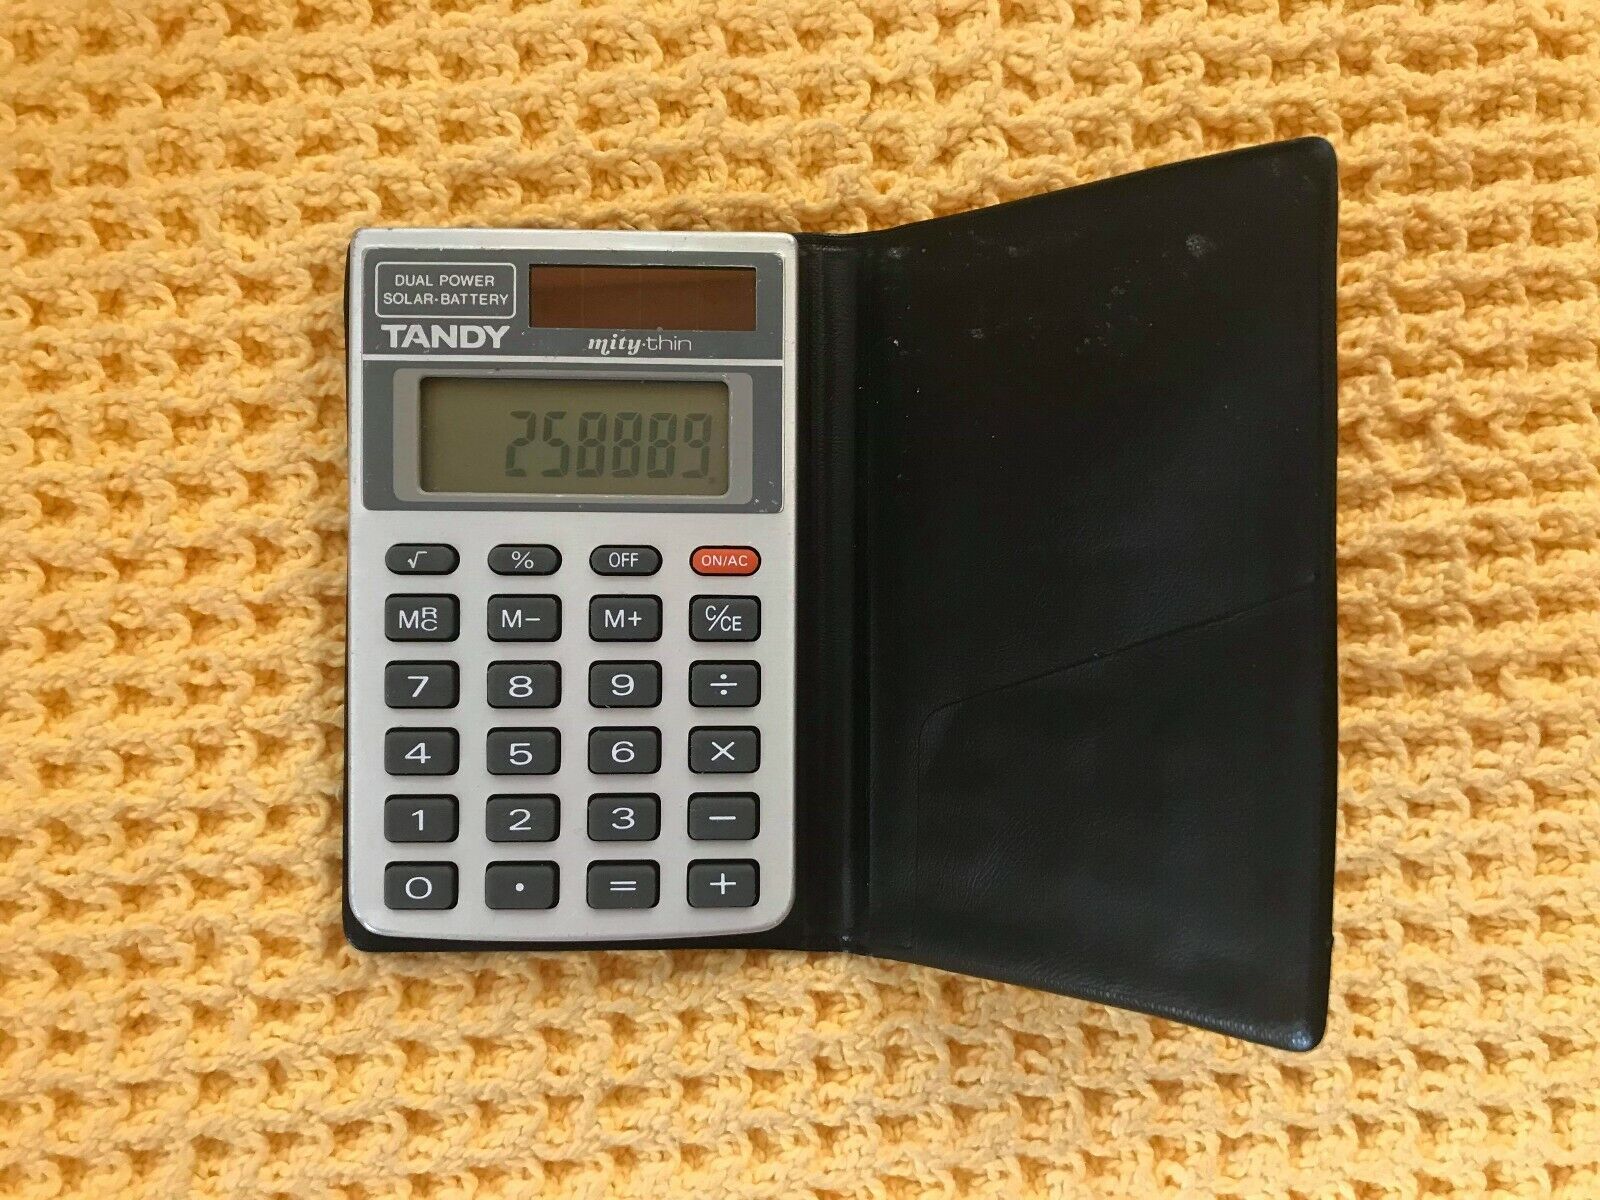 Vintage Tandy Mity-thin Solar Power Calculator